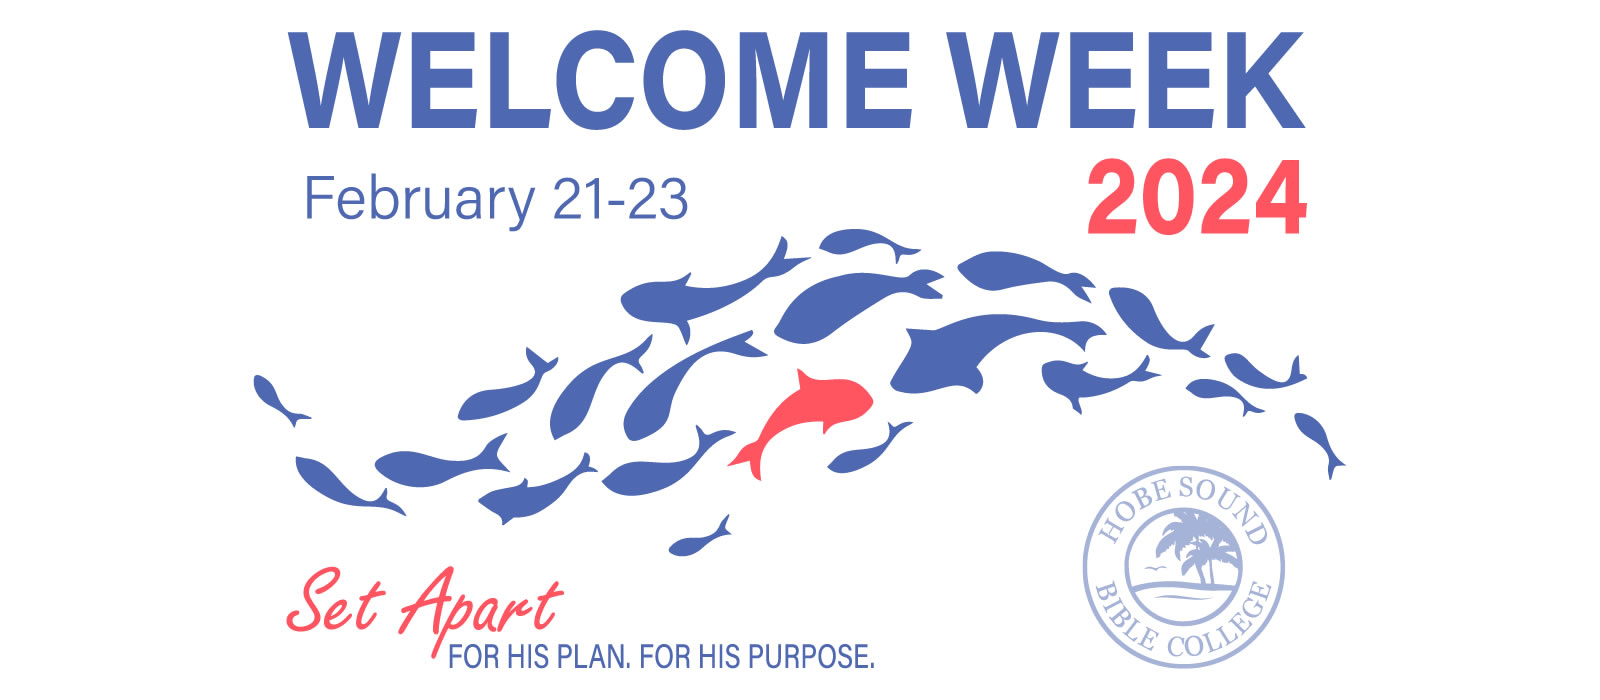 Hobe Sound Bible College Welcome Week